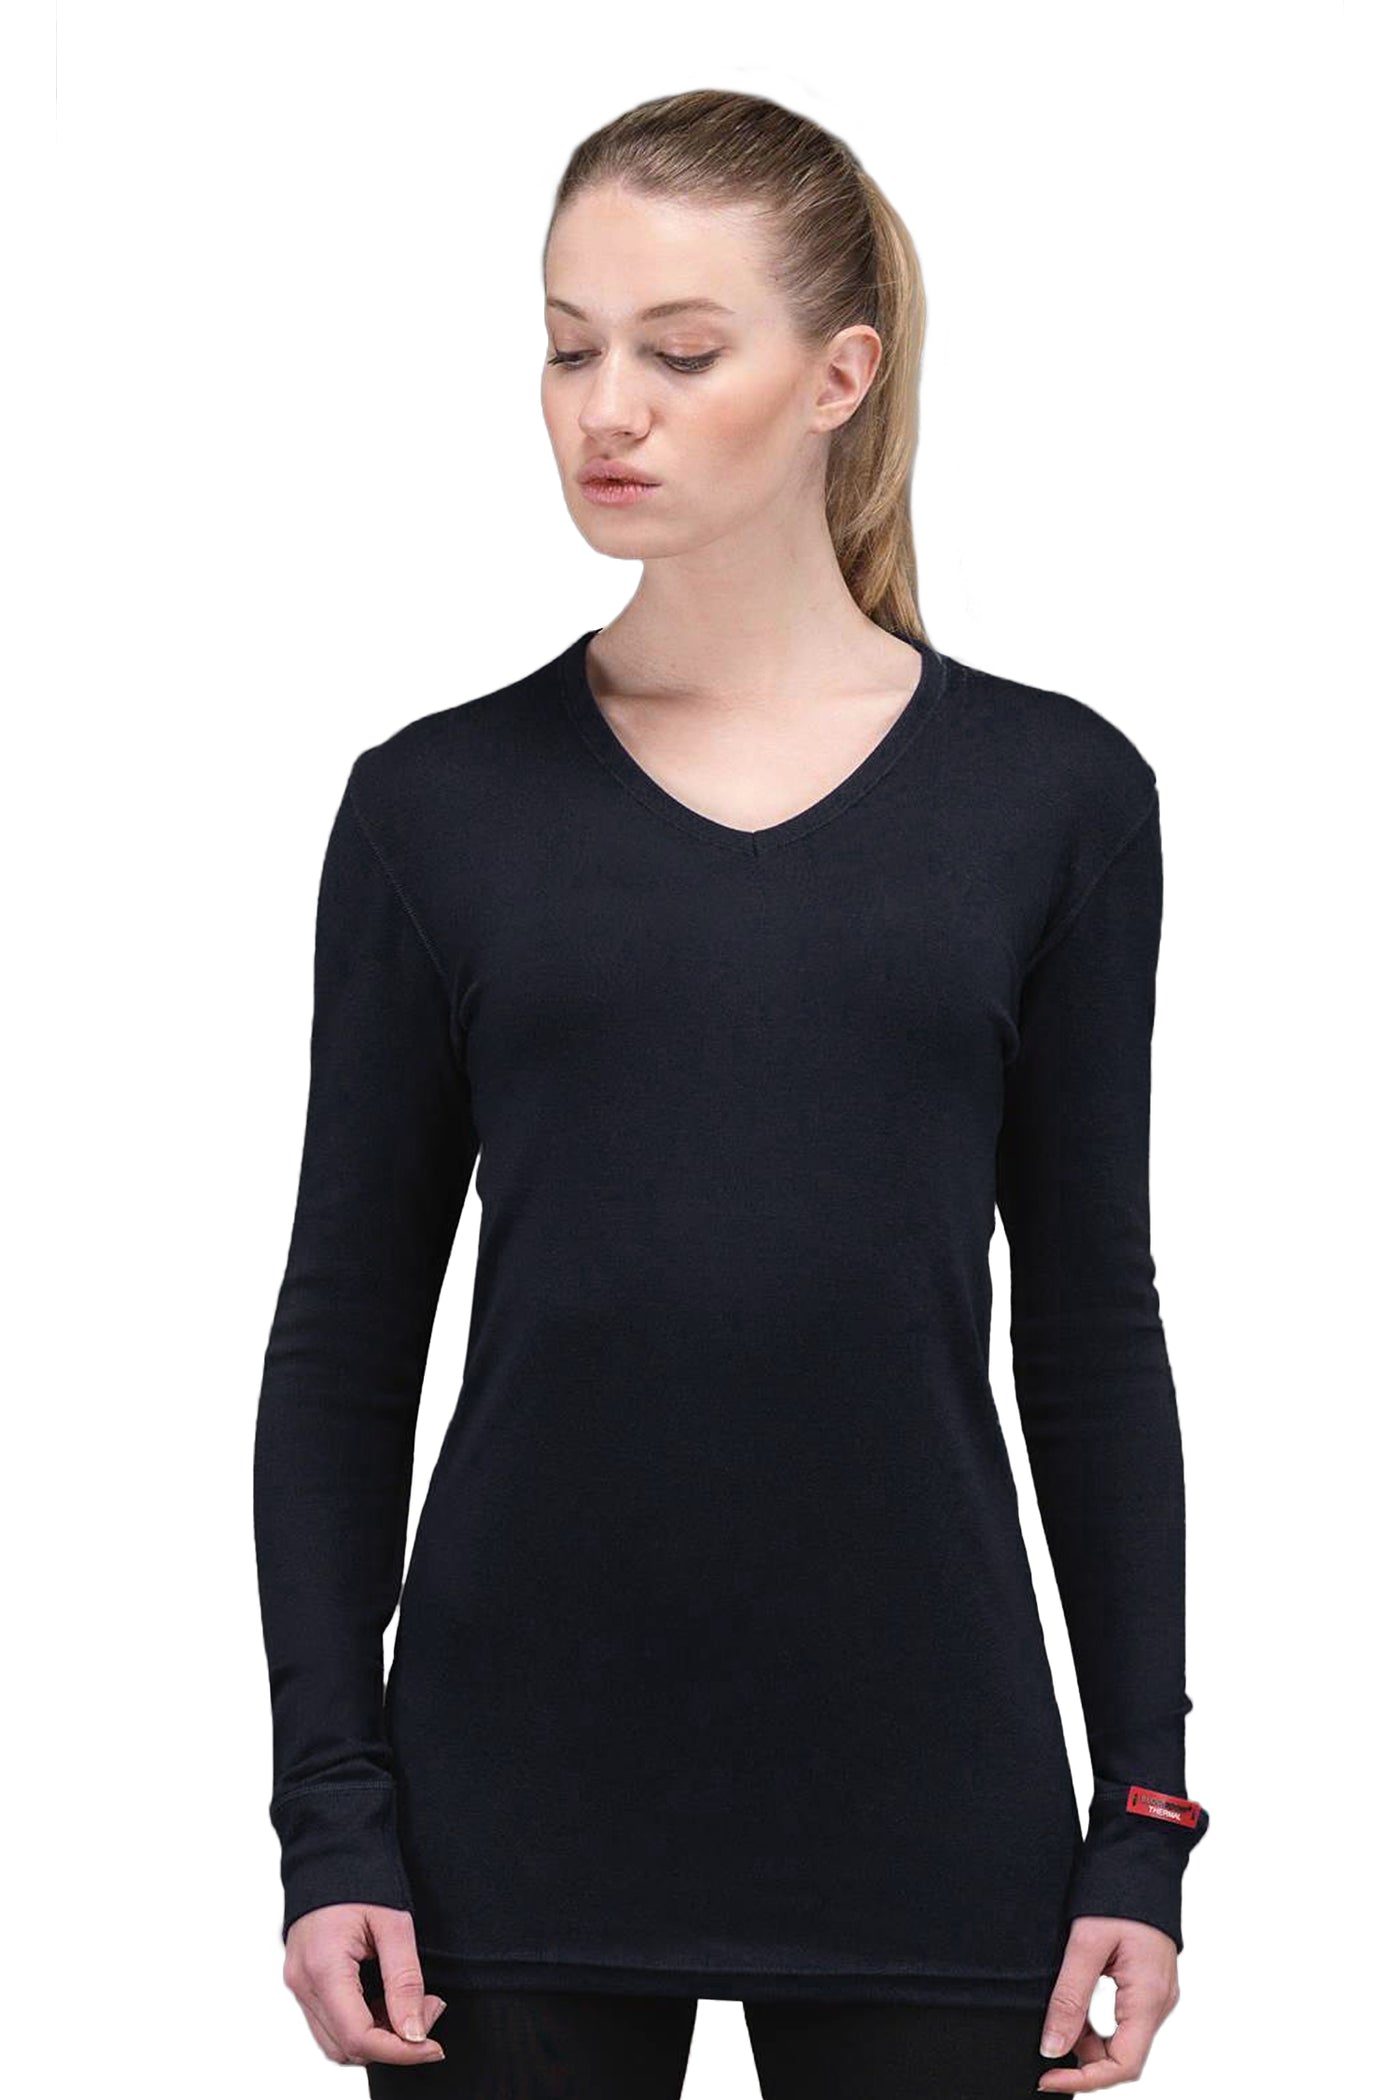 blackspade-Ladies' thermal long sleeve t-shirt-9259, level-2-underwear-black-2